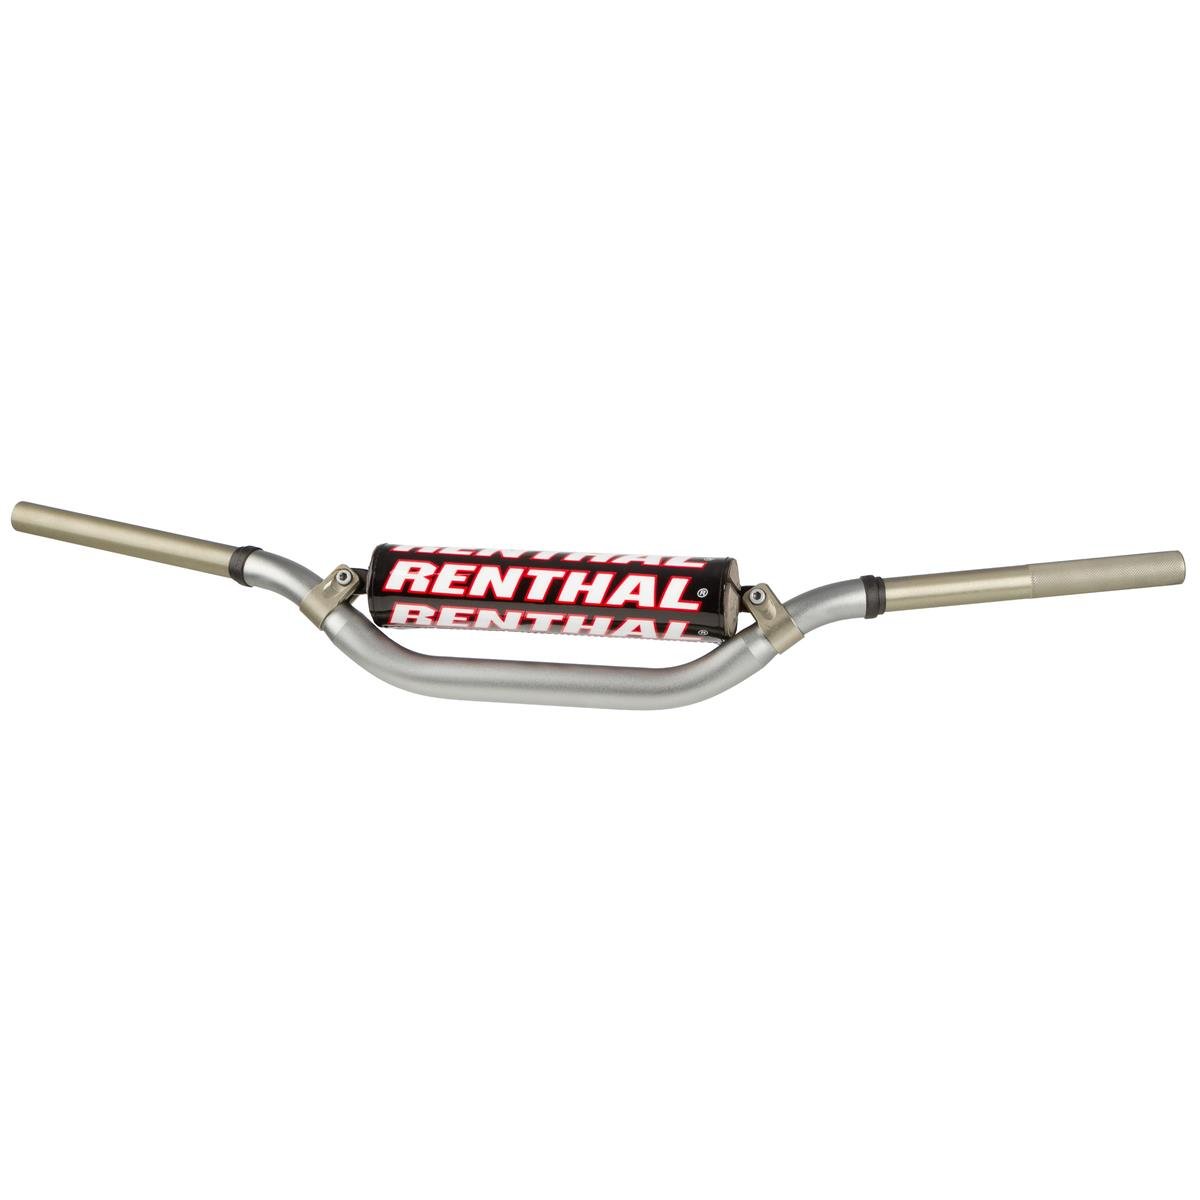 Renthal Manubrio Twinwall 997, 28.6 mm, Tanium